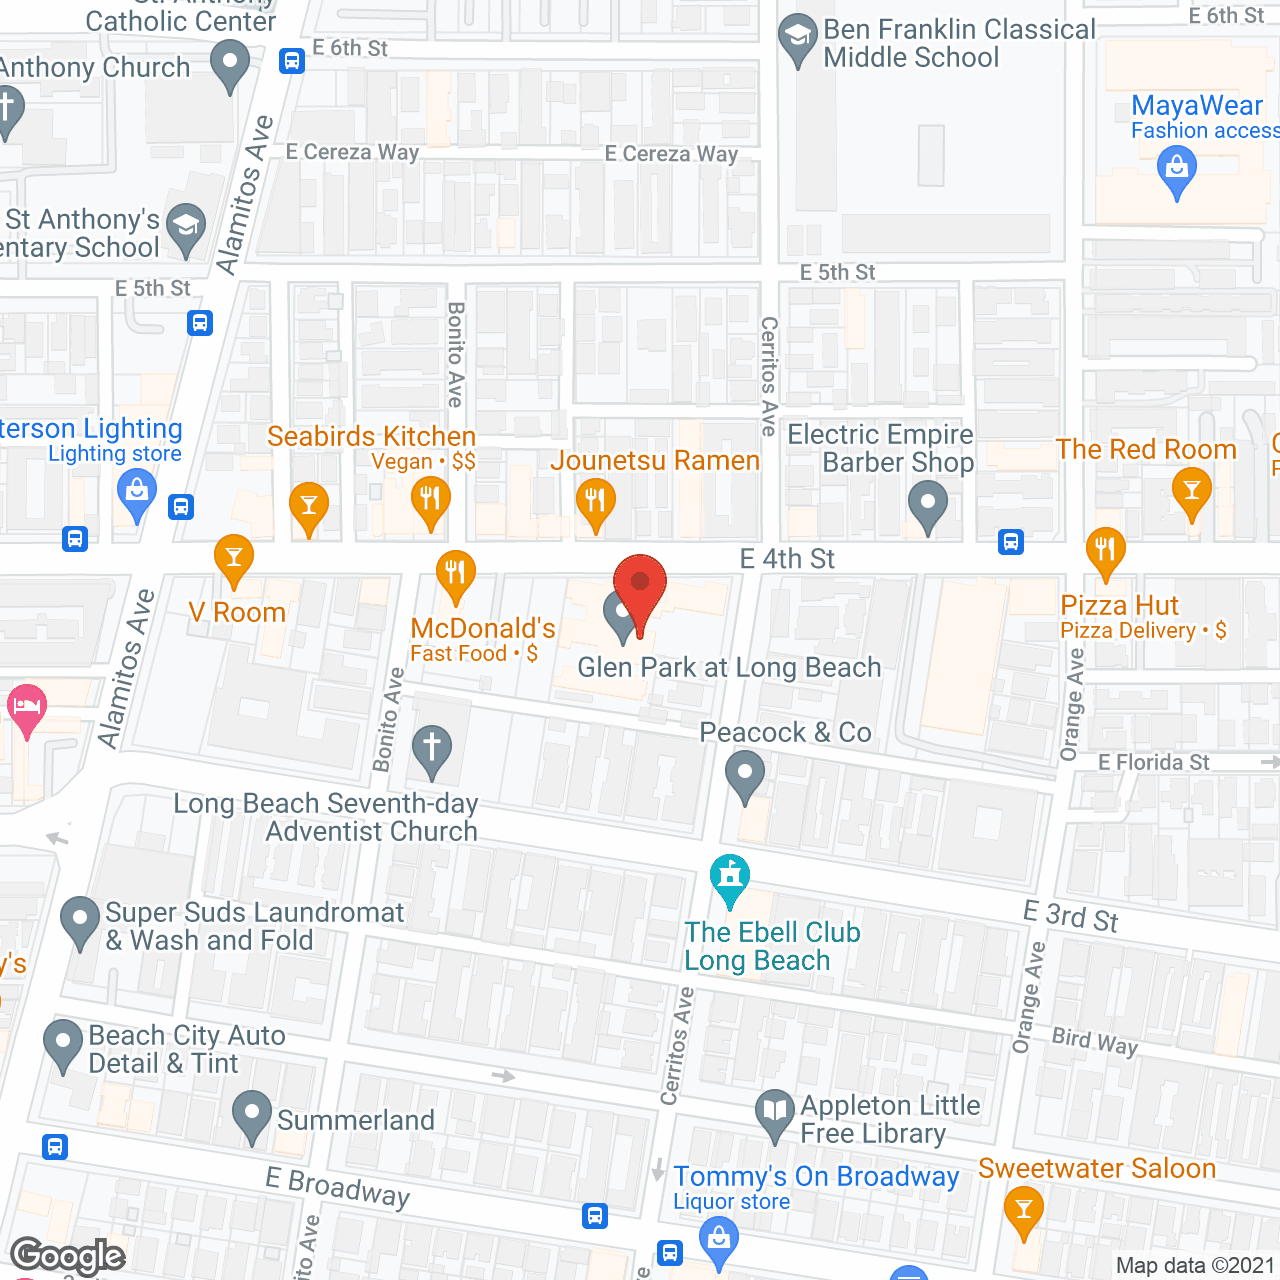 Glen Park at Long Beach in google map